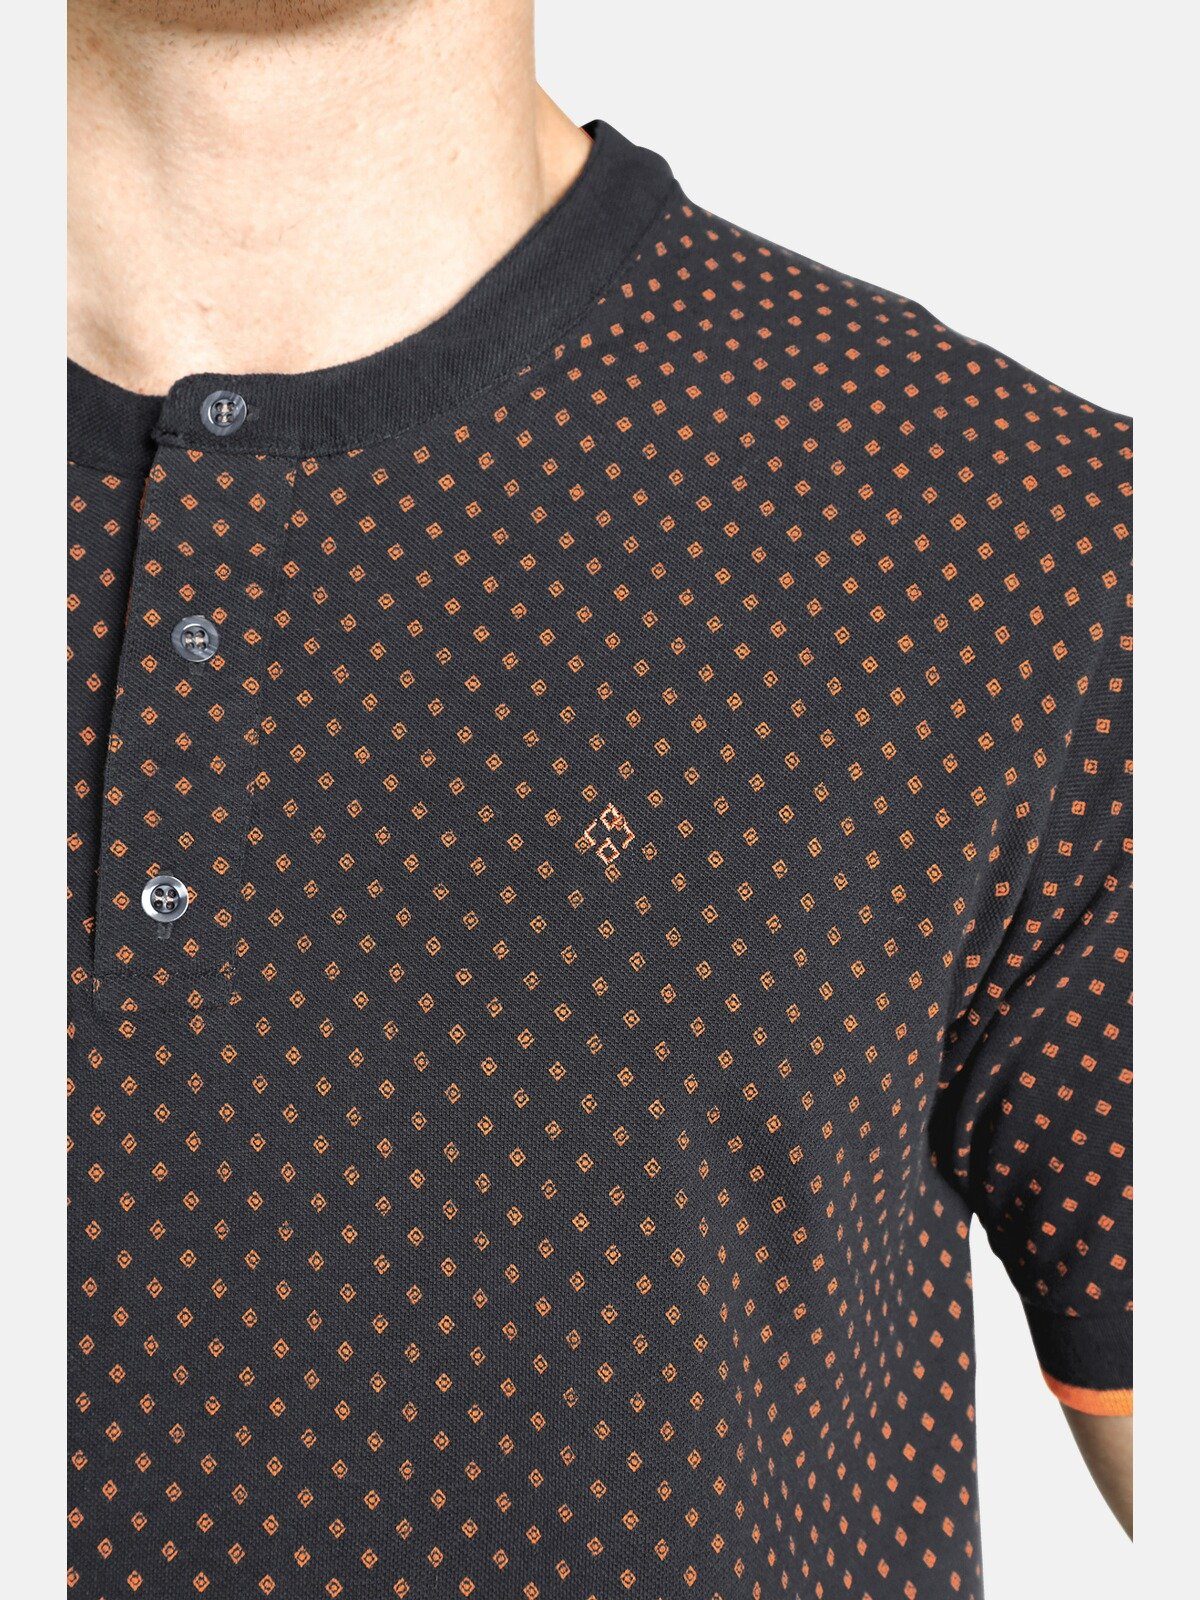 dunkelgrau Rautendesign minimal DUKE Charles in COLIN Colby T-Shirt